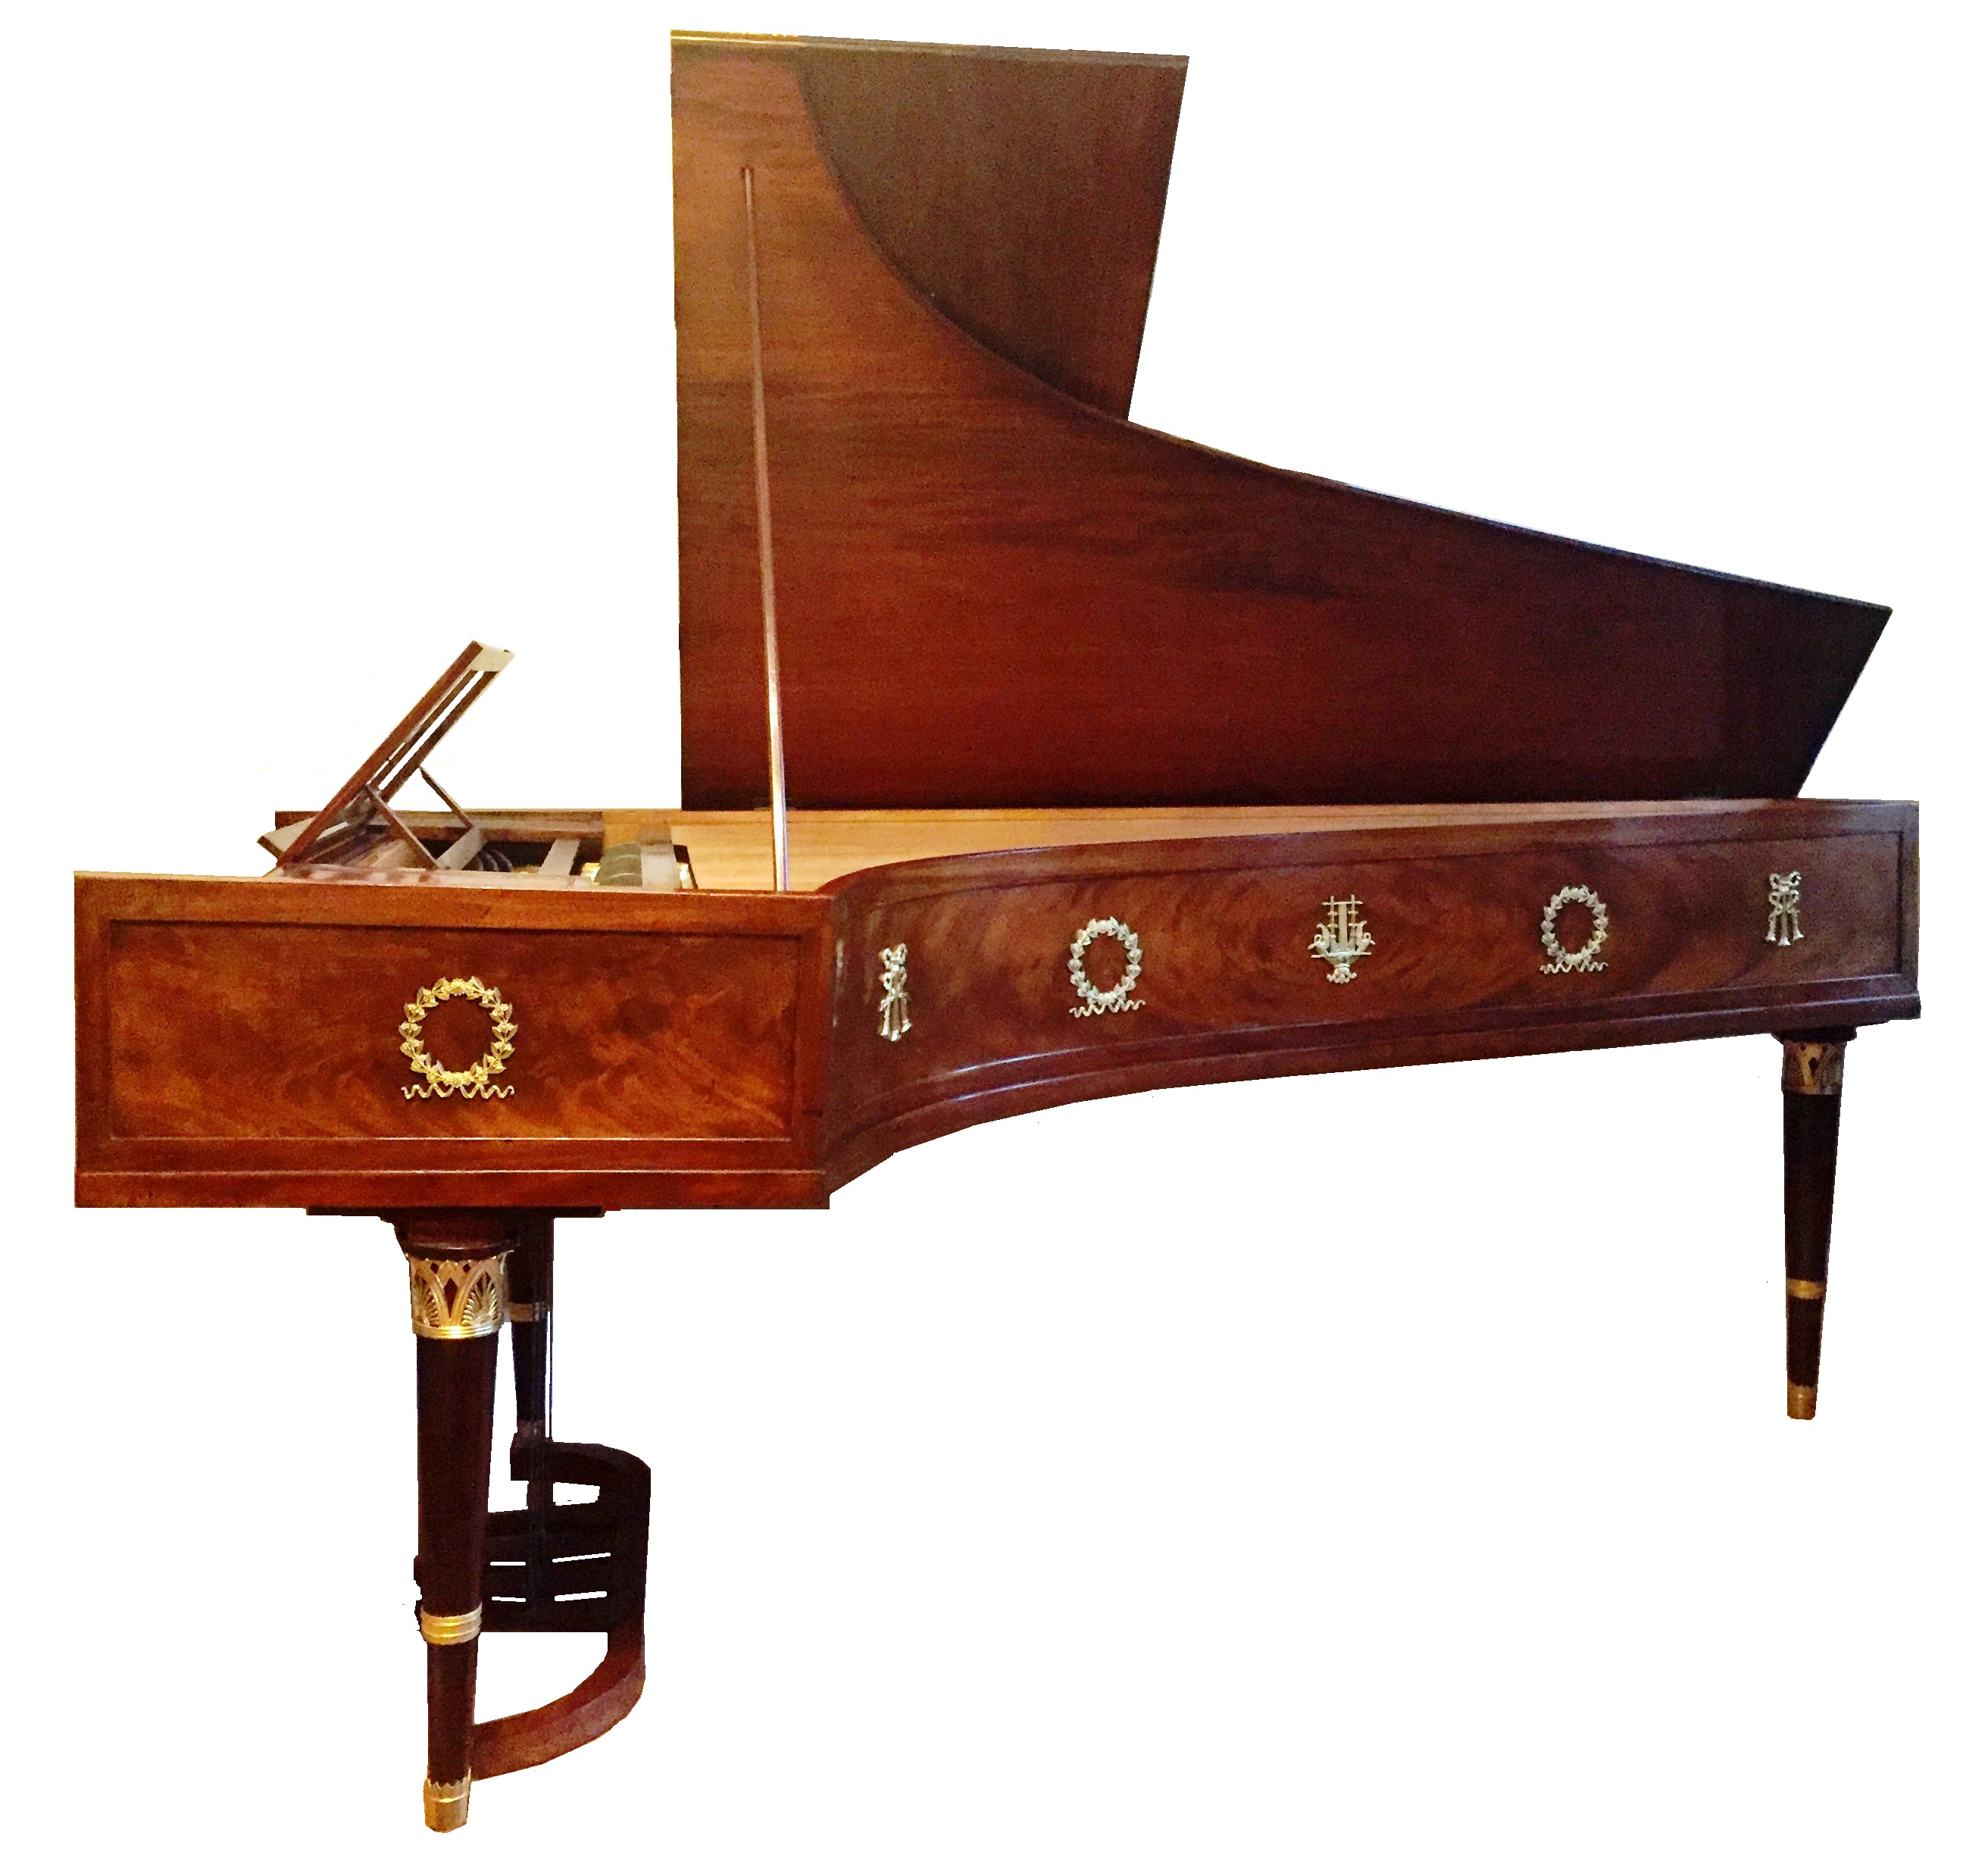 Erard 1802 - Hammerflügel - Piano en form de clavecin - Eric Feller Collection